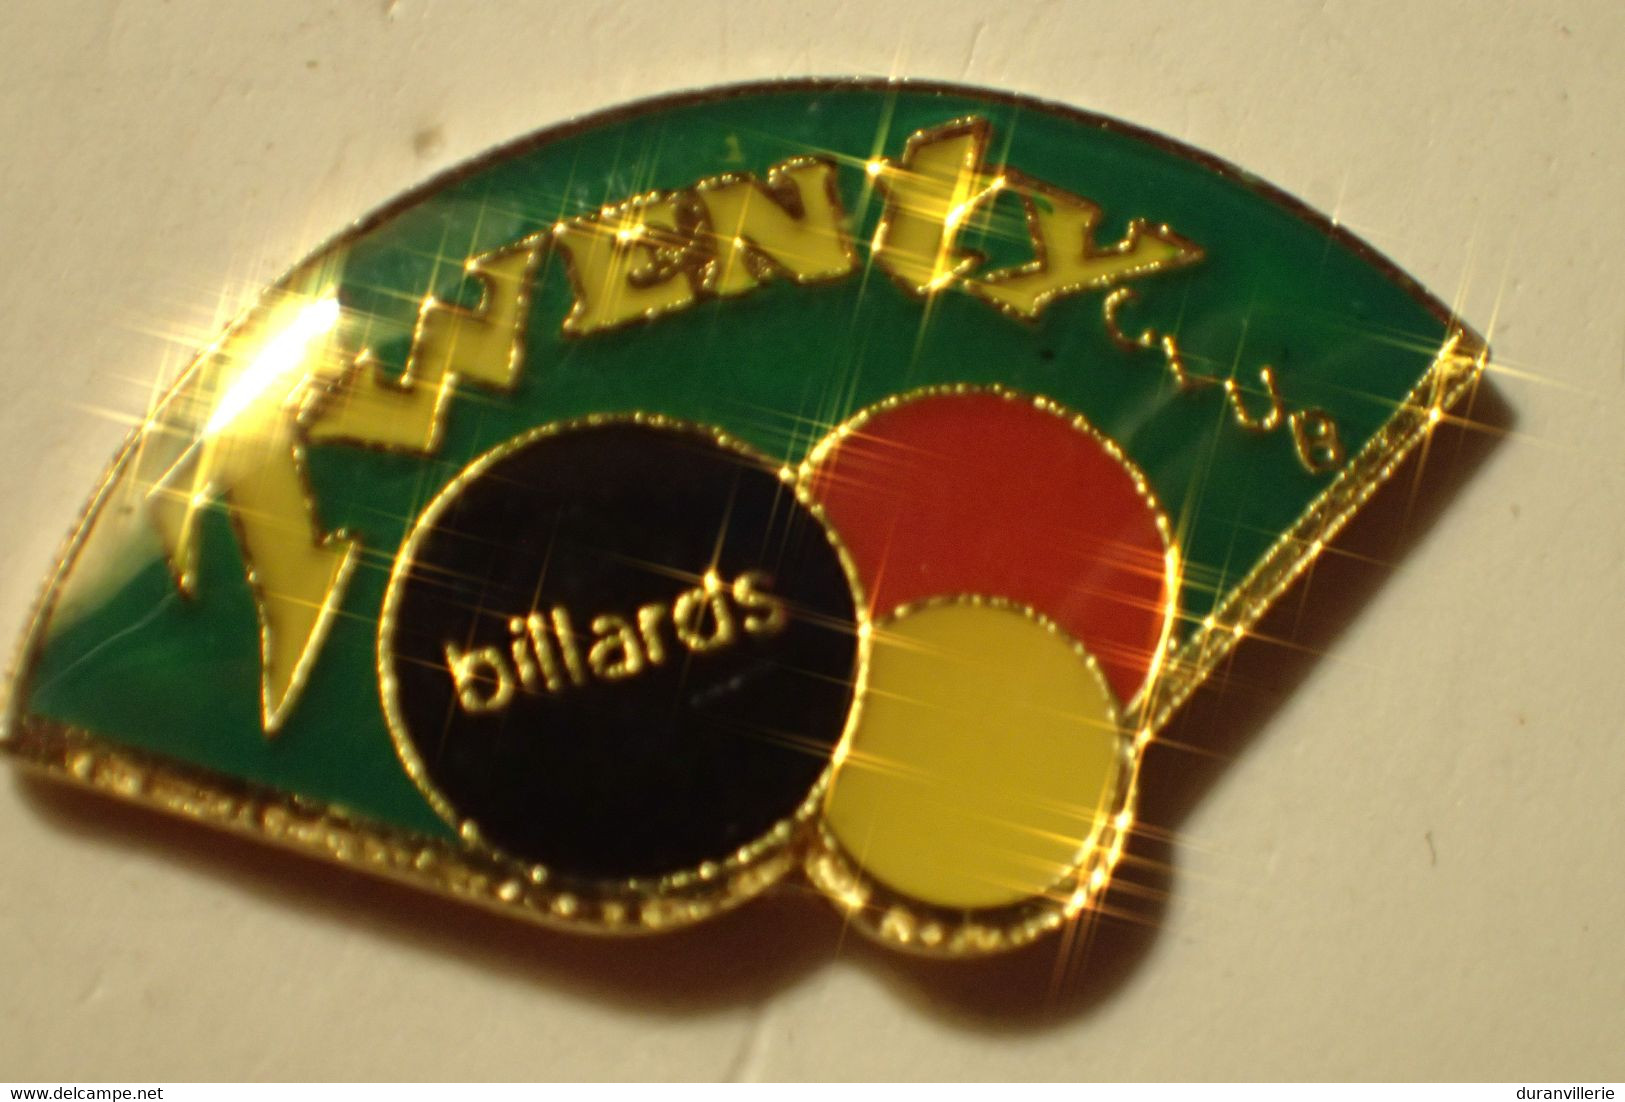 Billard Twenty Club - Biliardo